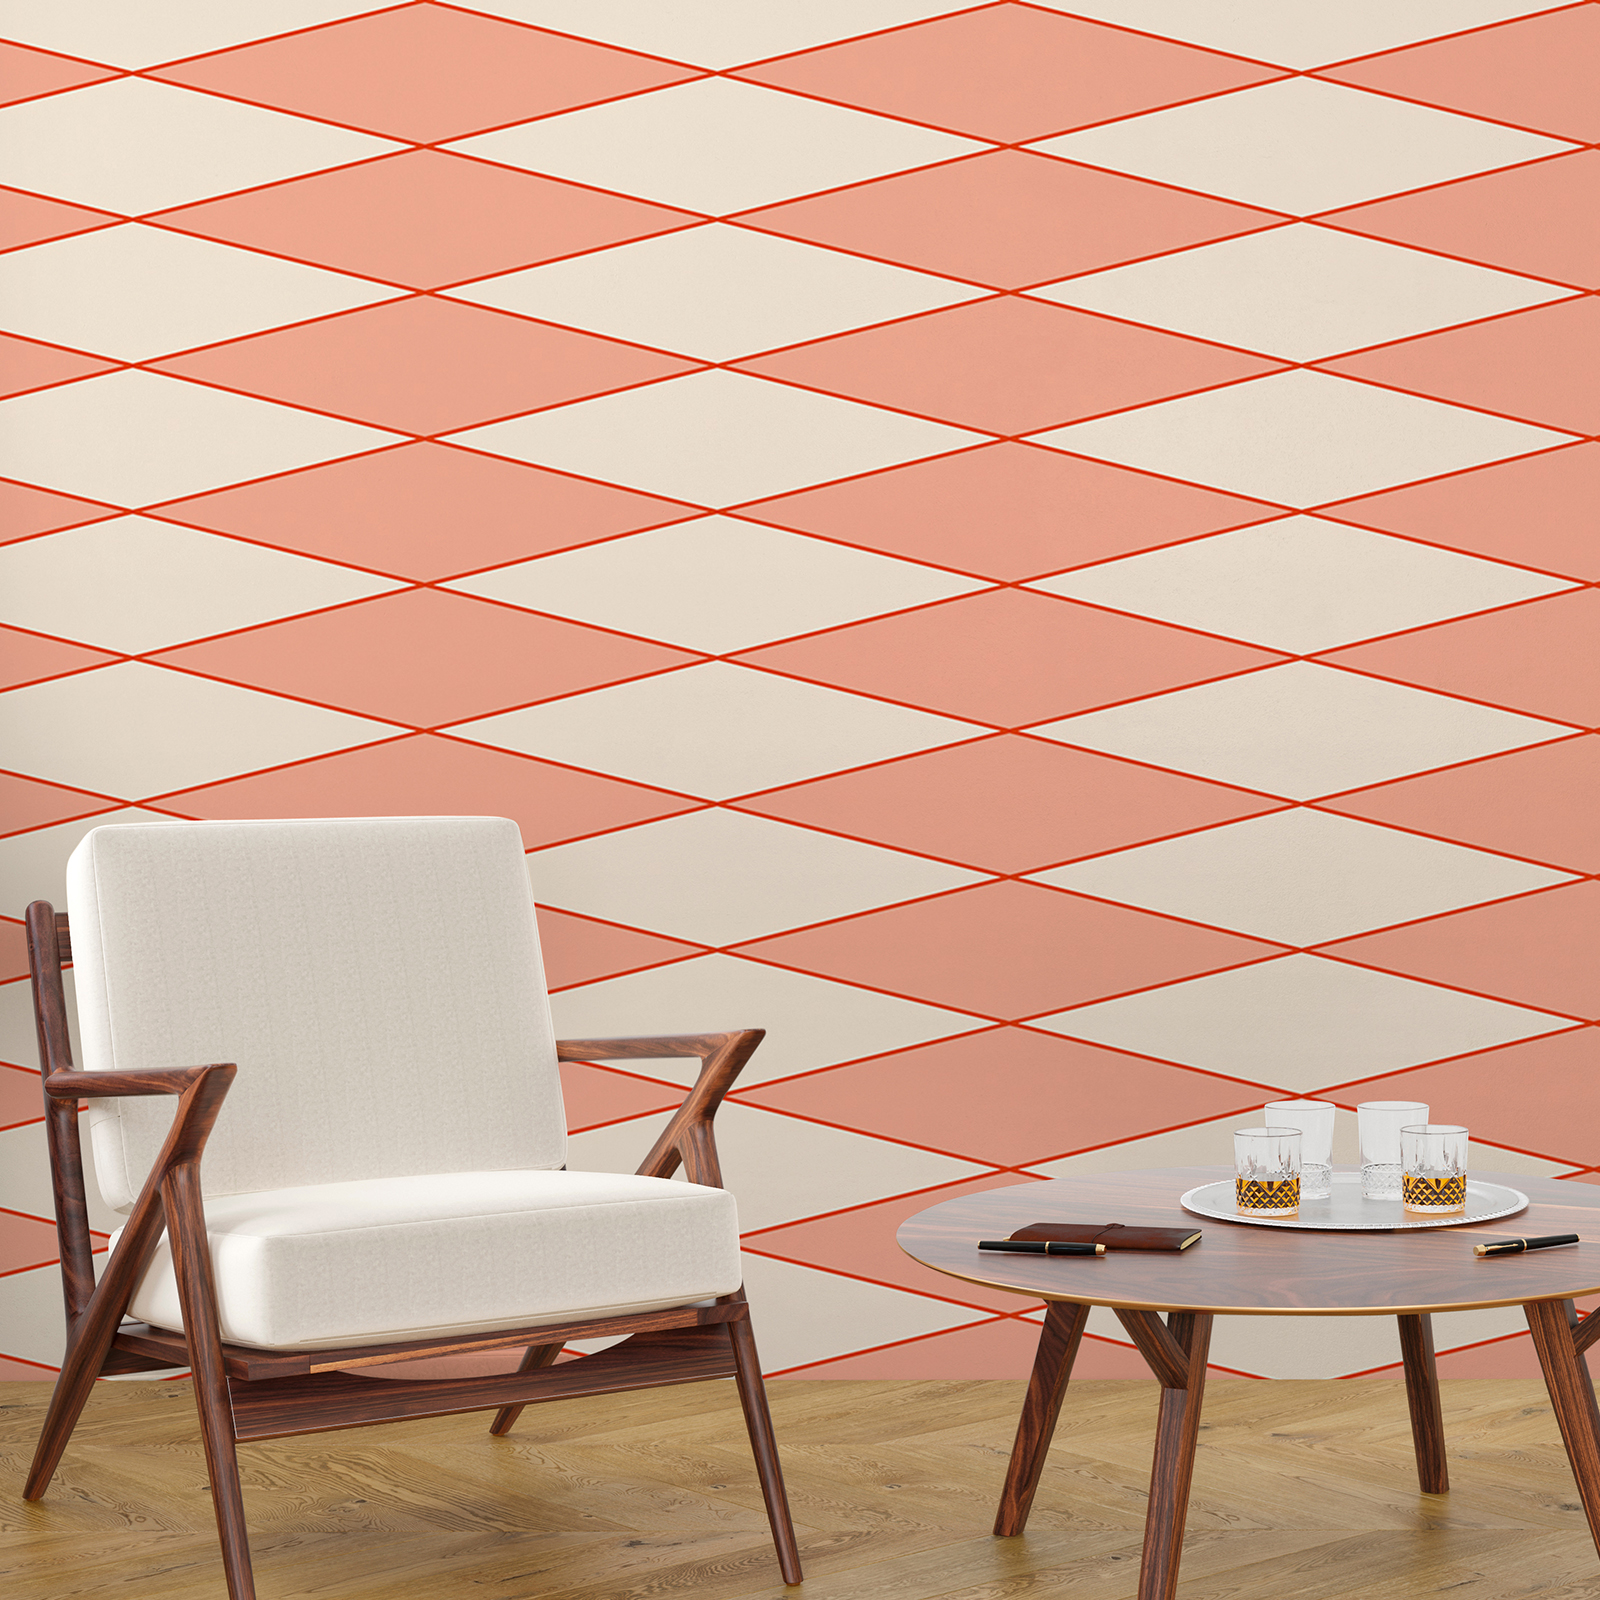 Photo wallpaper with diamonds & line pattern - Orange, Beige | Textured non-woven
